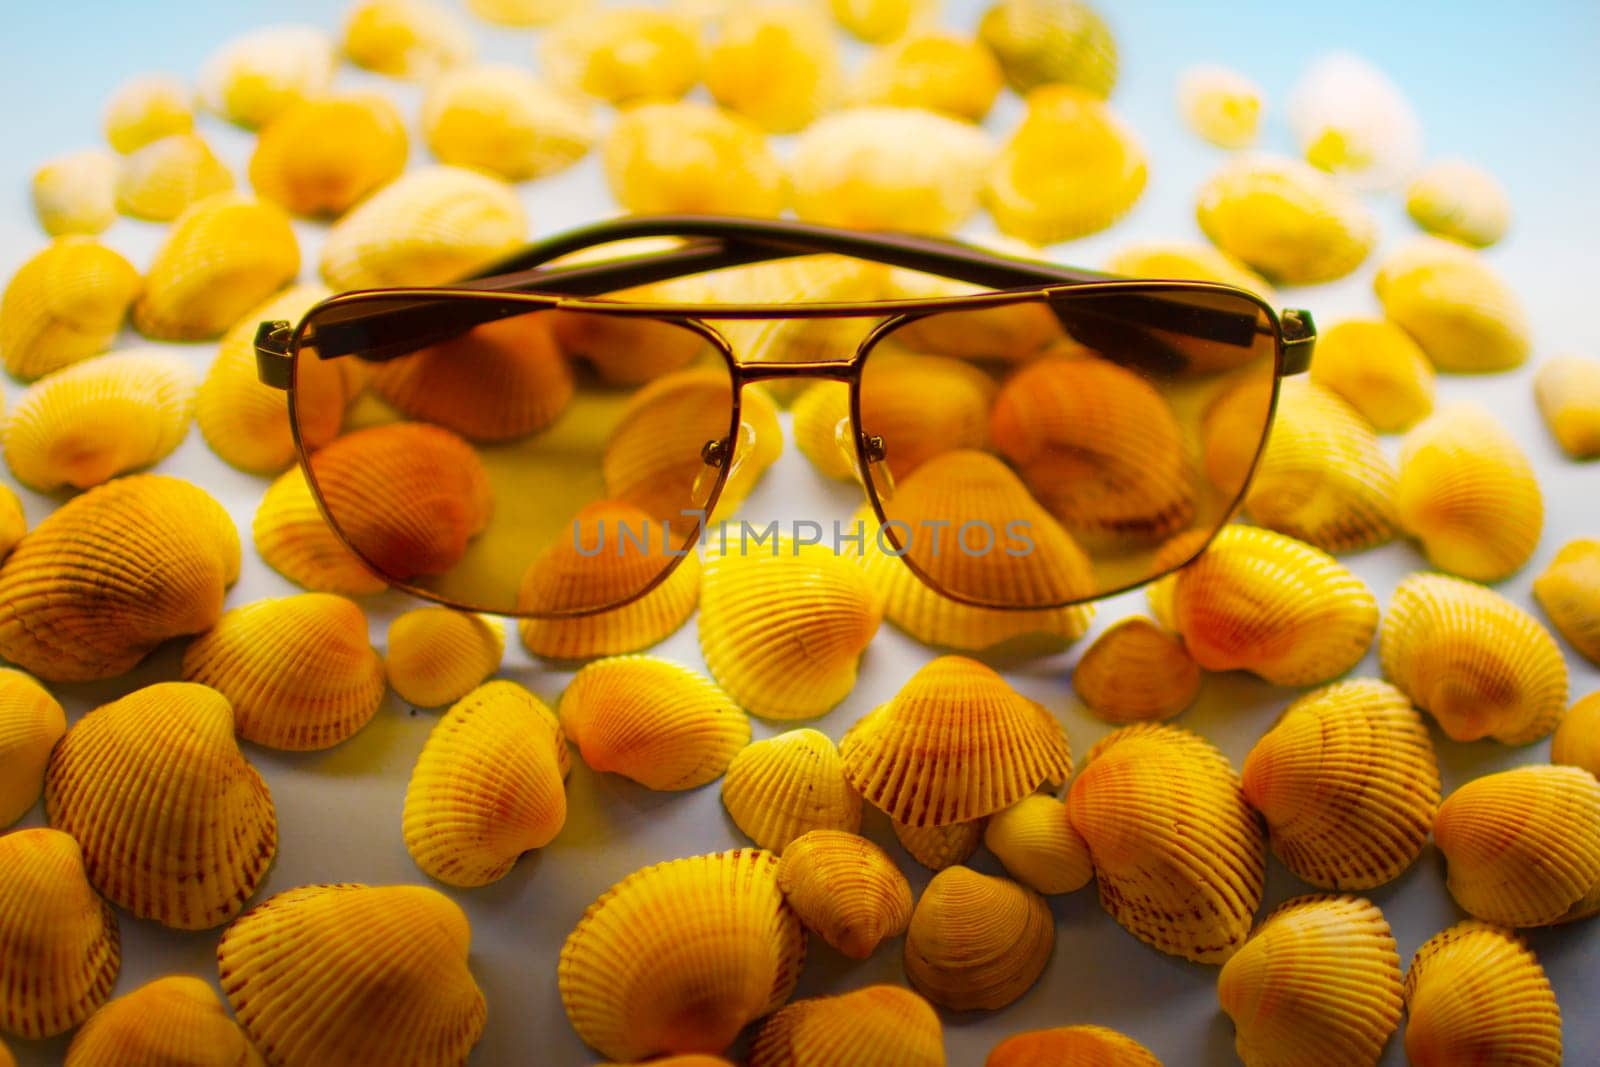 Sunglasses lie on seashells. High quality photo